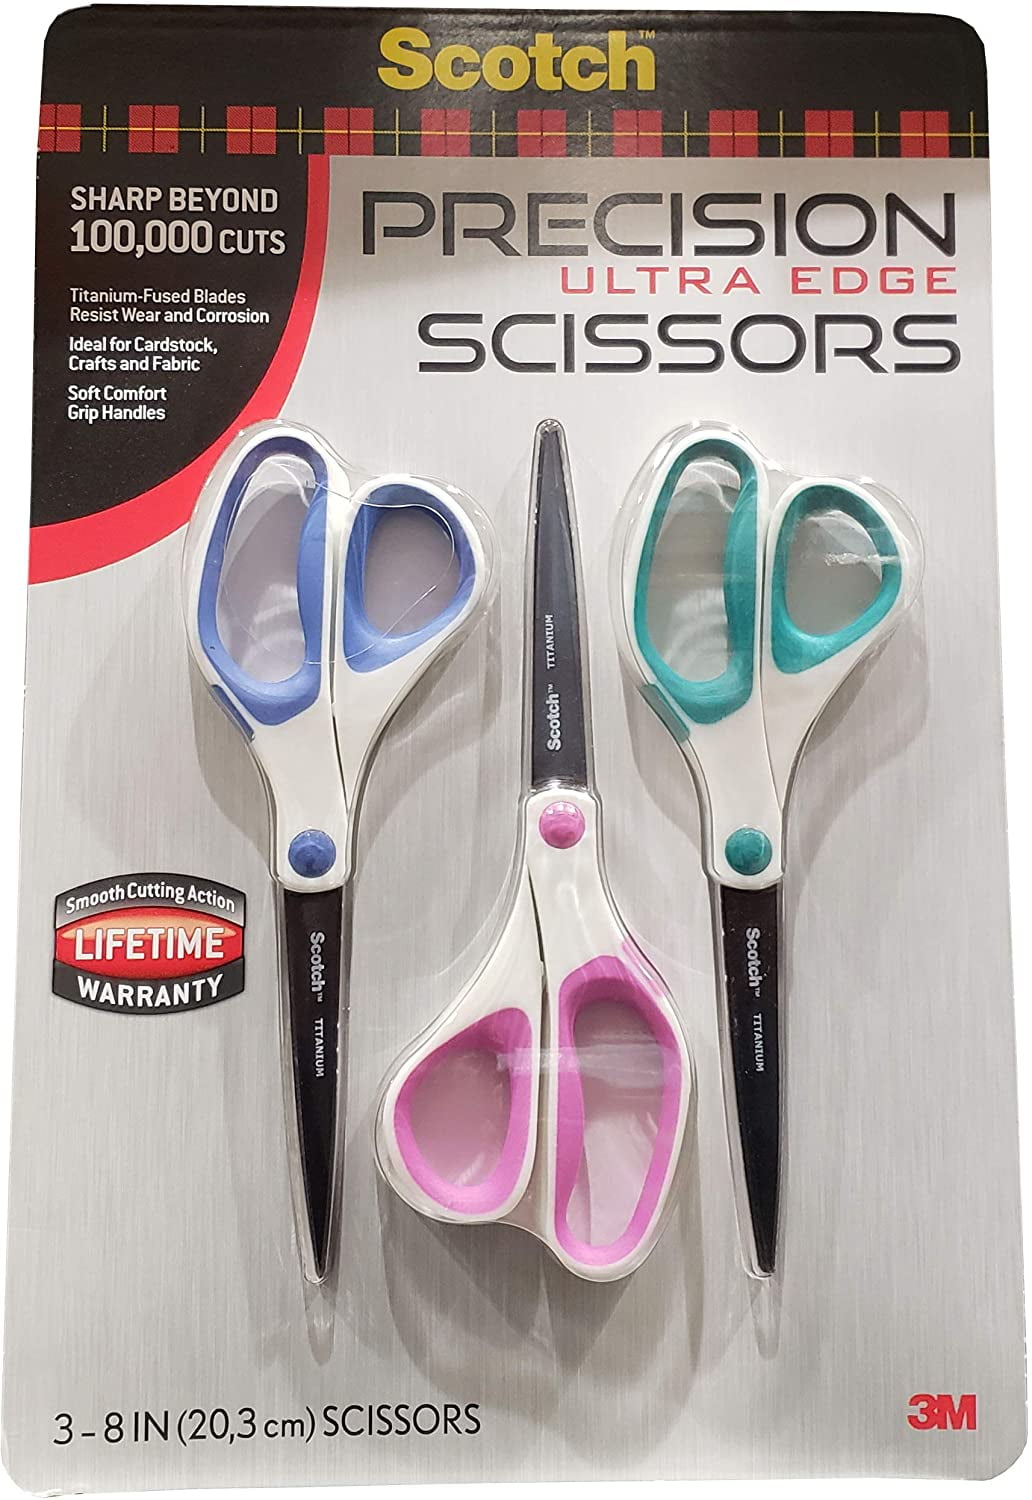 Scotch 8 Precision Ultra Edge Scissors, Assorted Colors, 3 ct